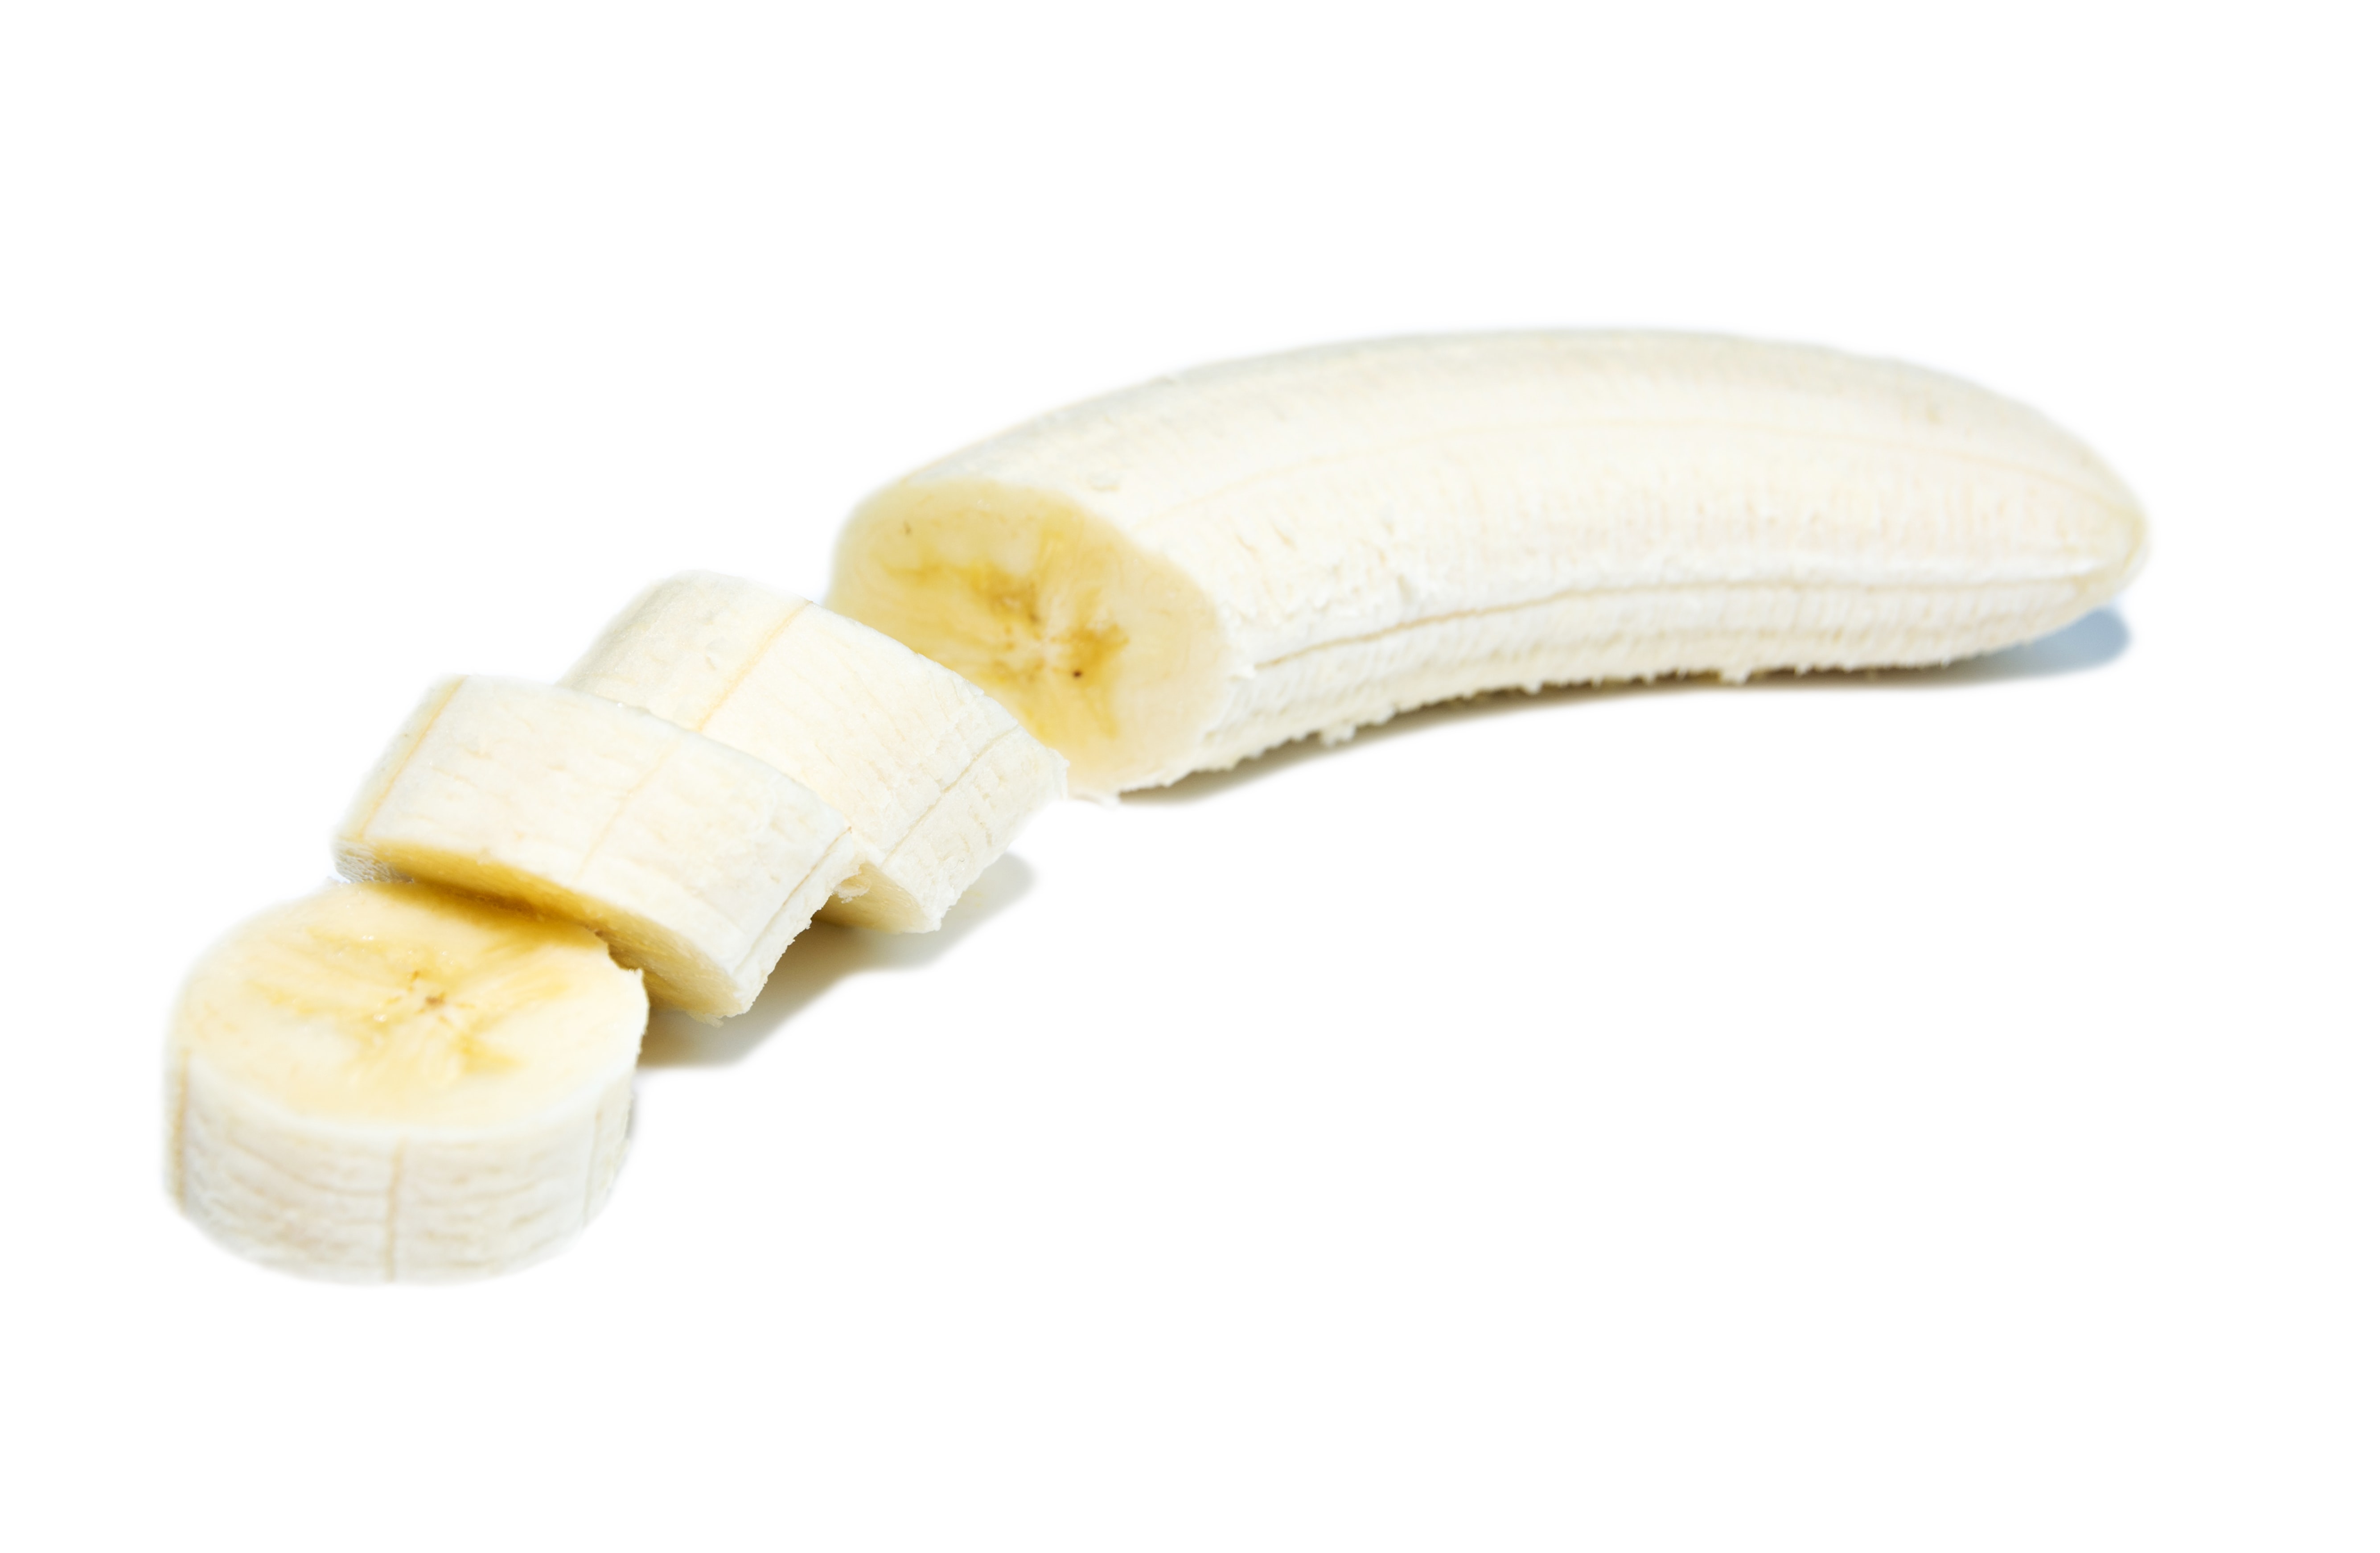 a banana half-sliced